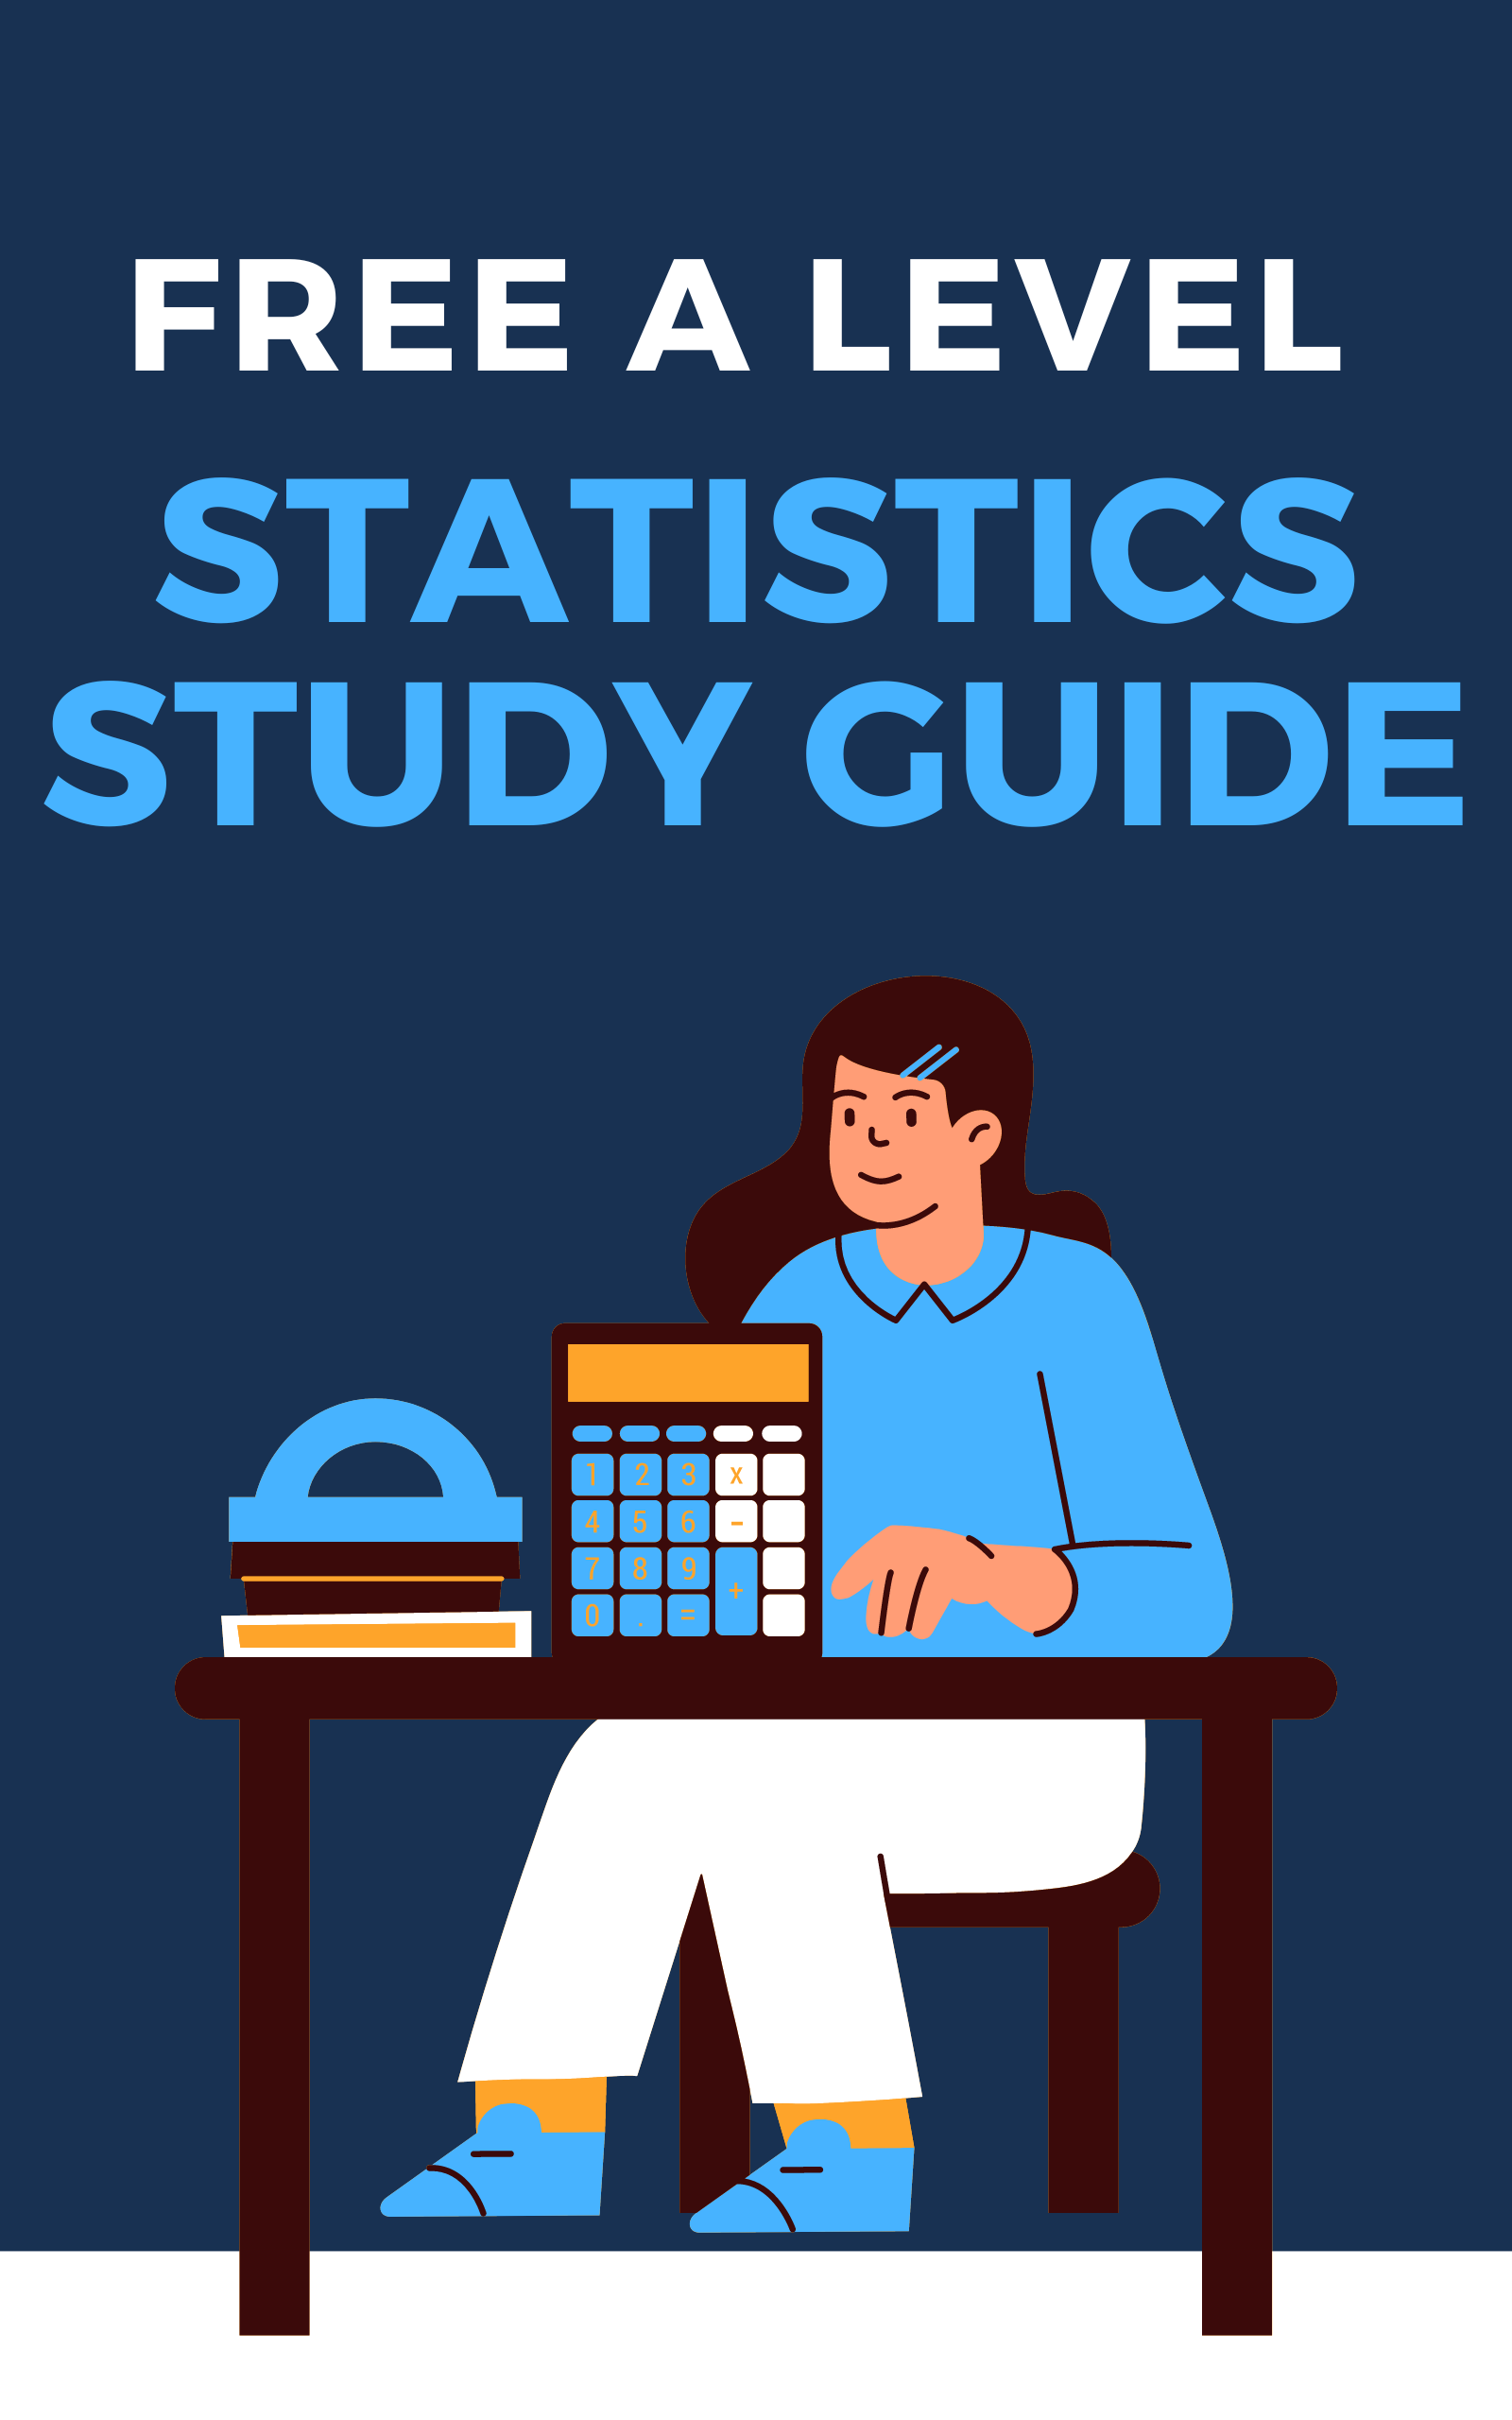 A Level Statistics study guide